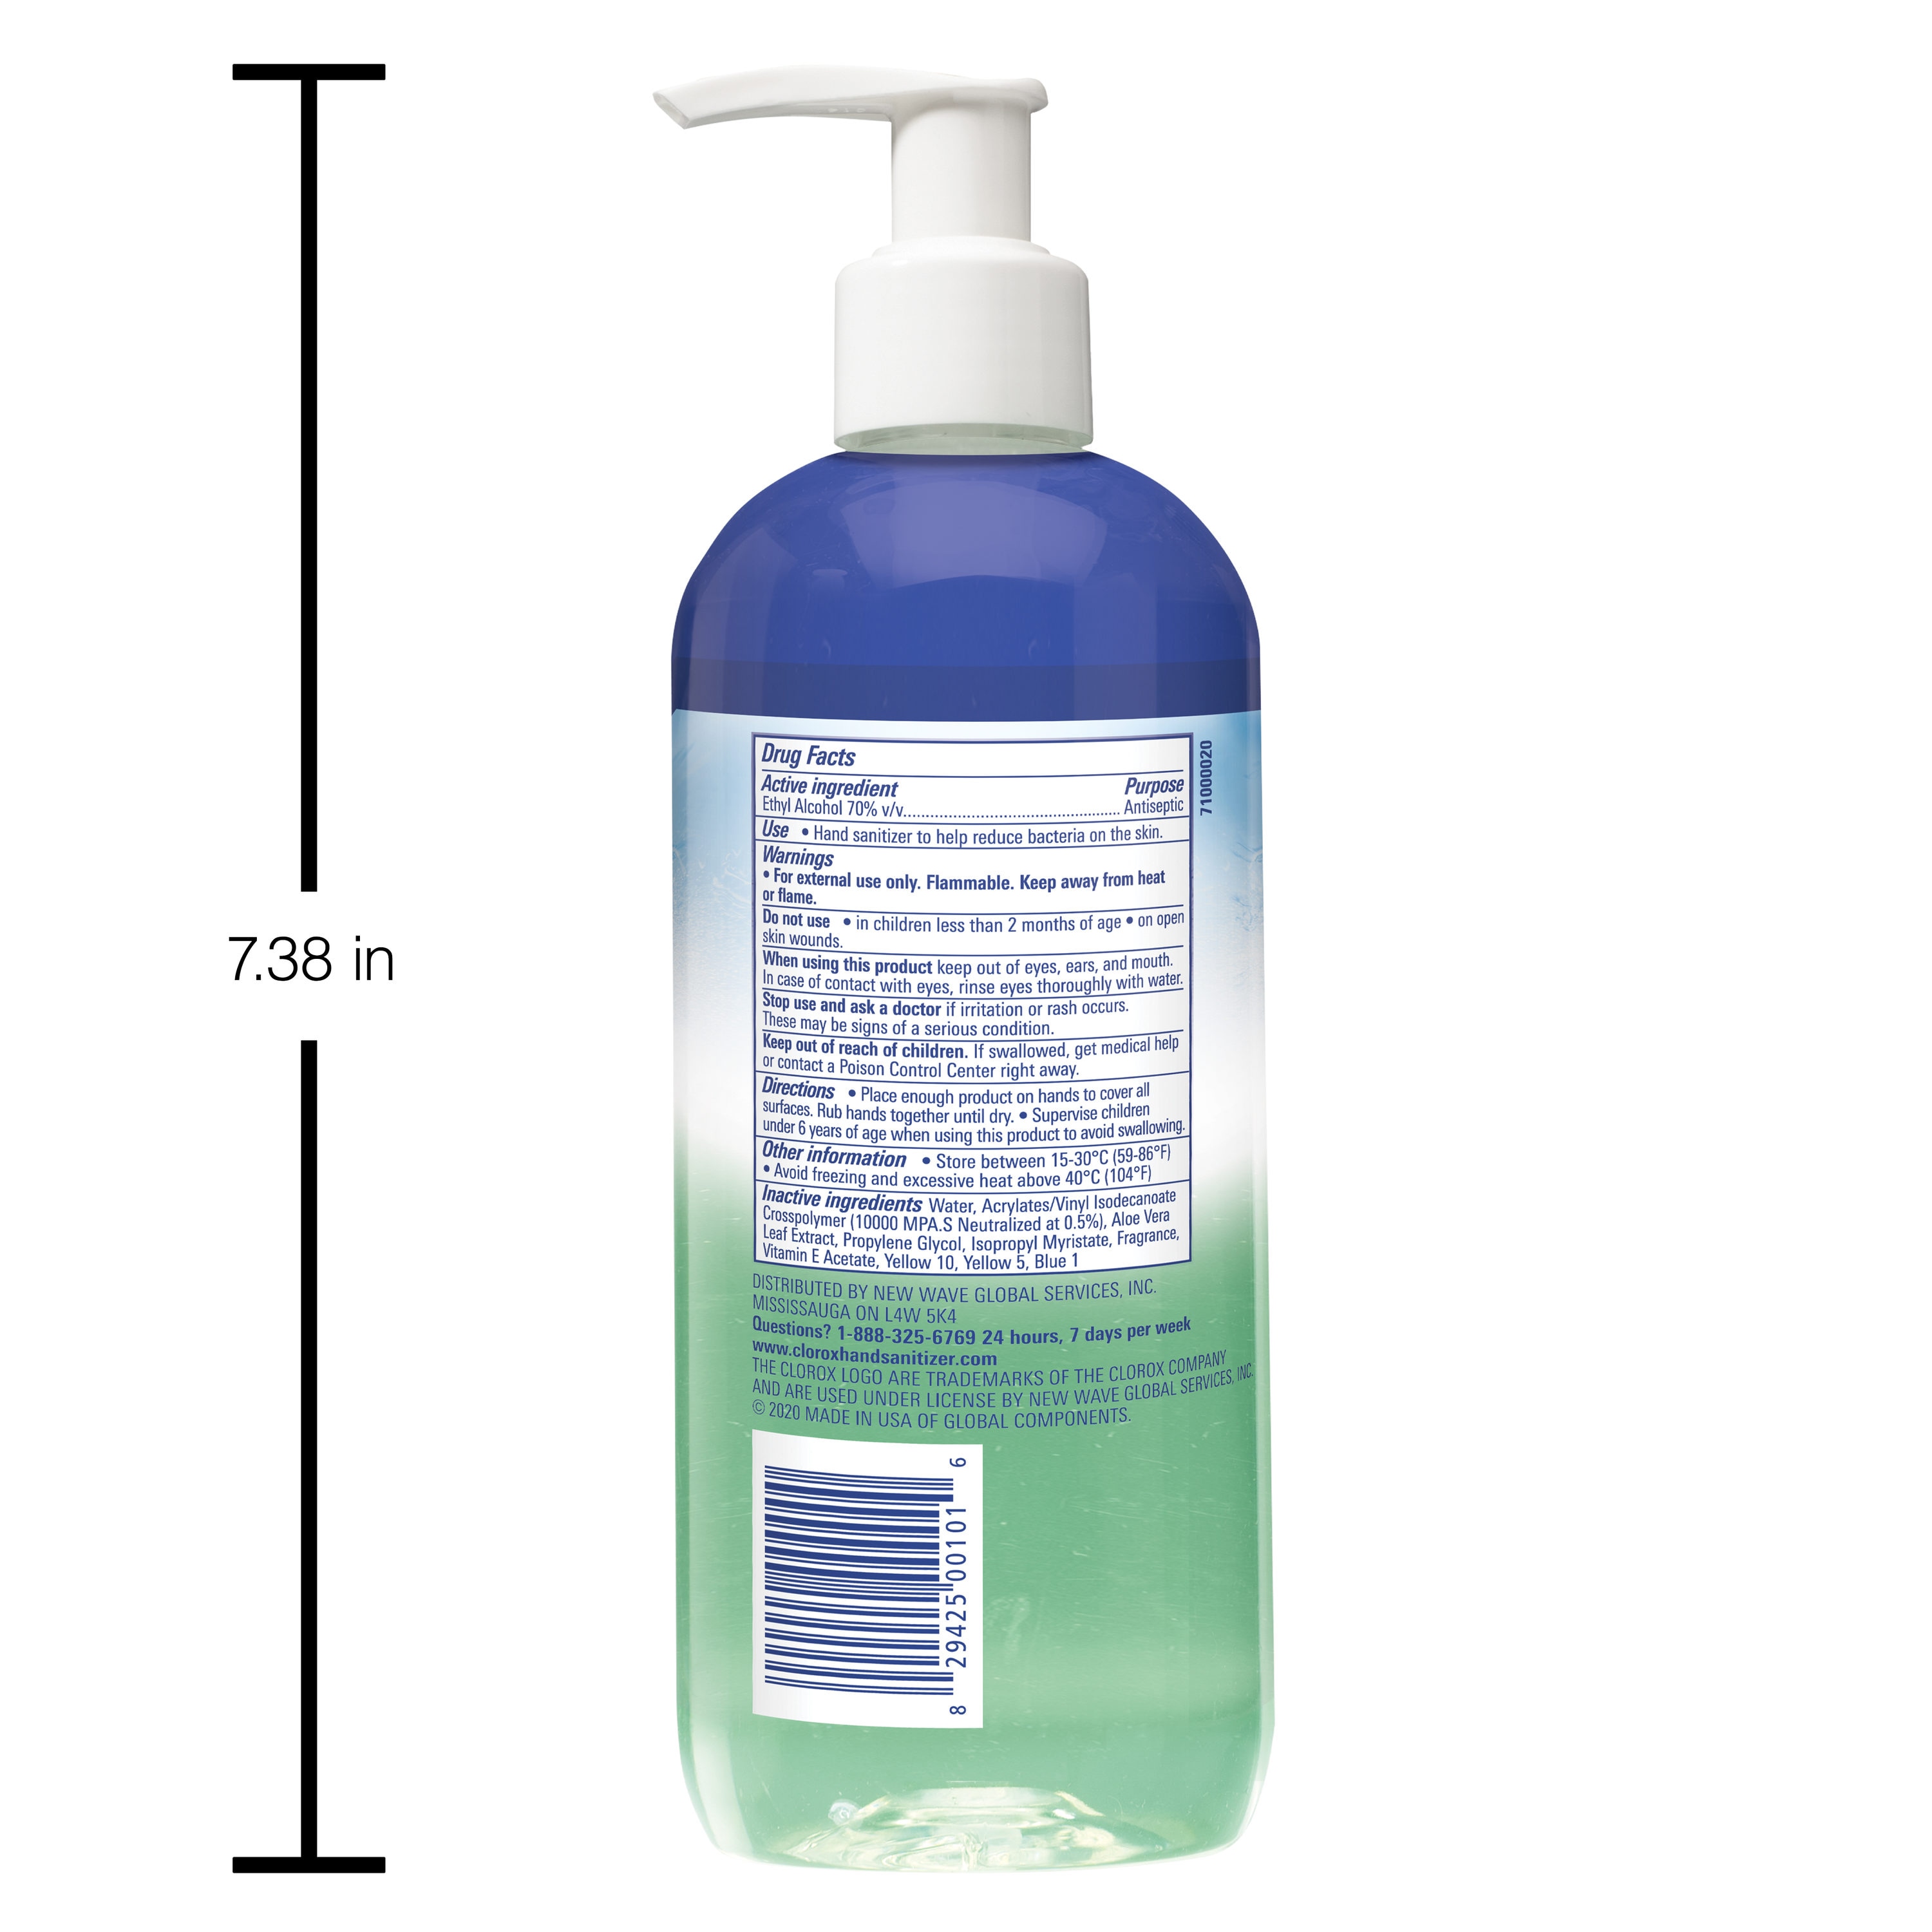 Clorox Pro Single Use Hand Sanitizer Gel 0.067 Oz 2 ml 100 Per Box Case Of  12 Boxes - Office Depot